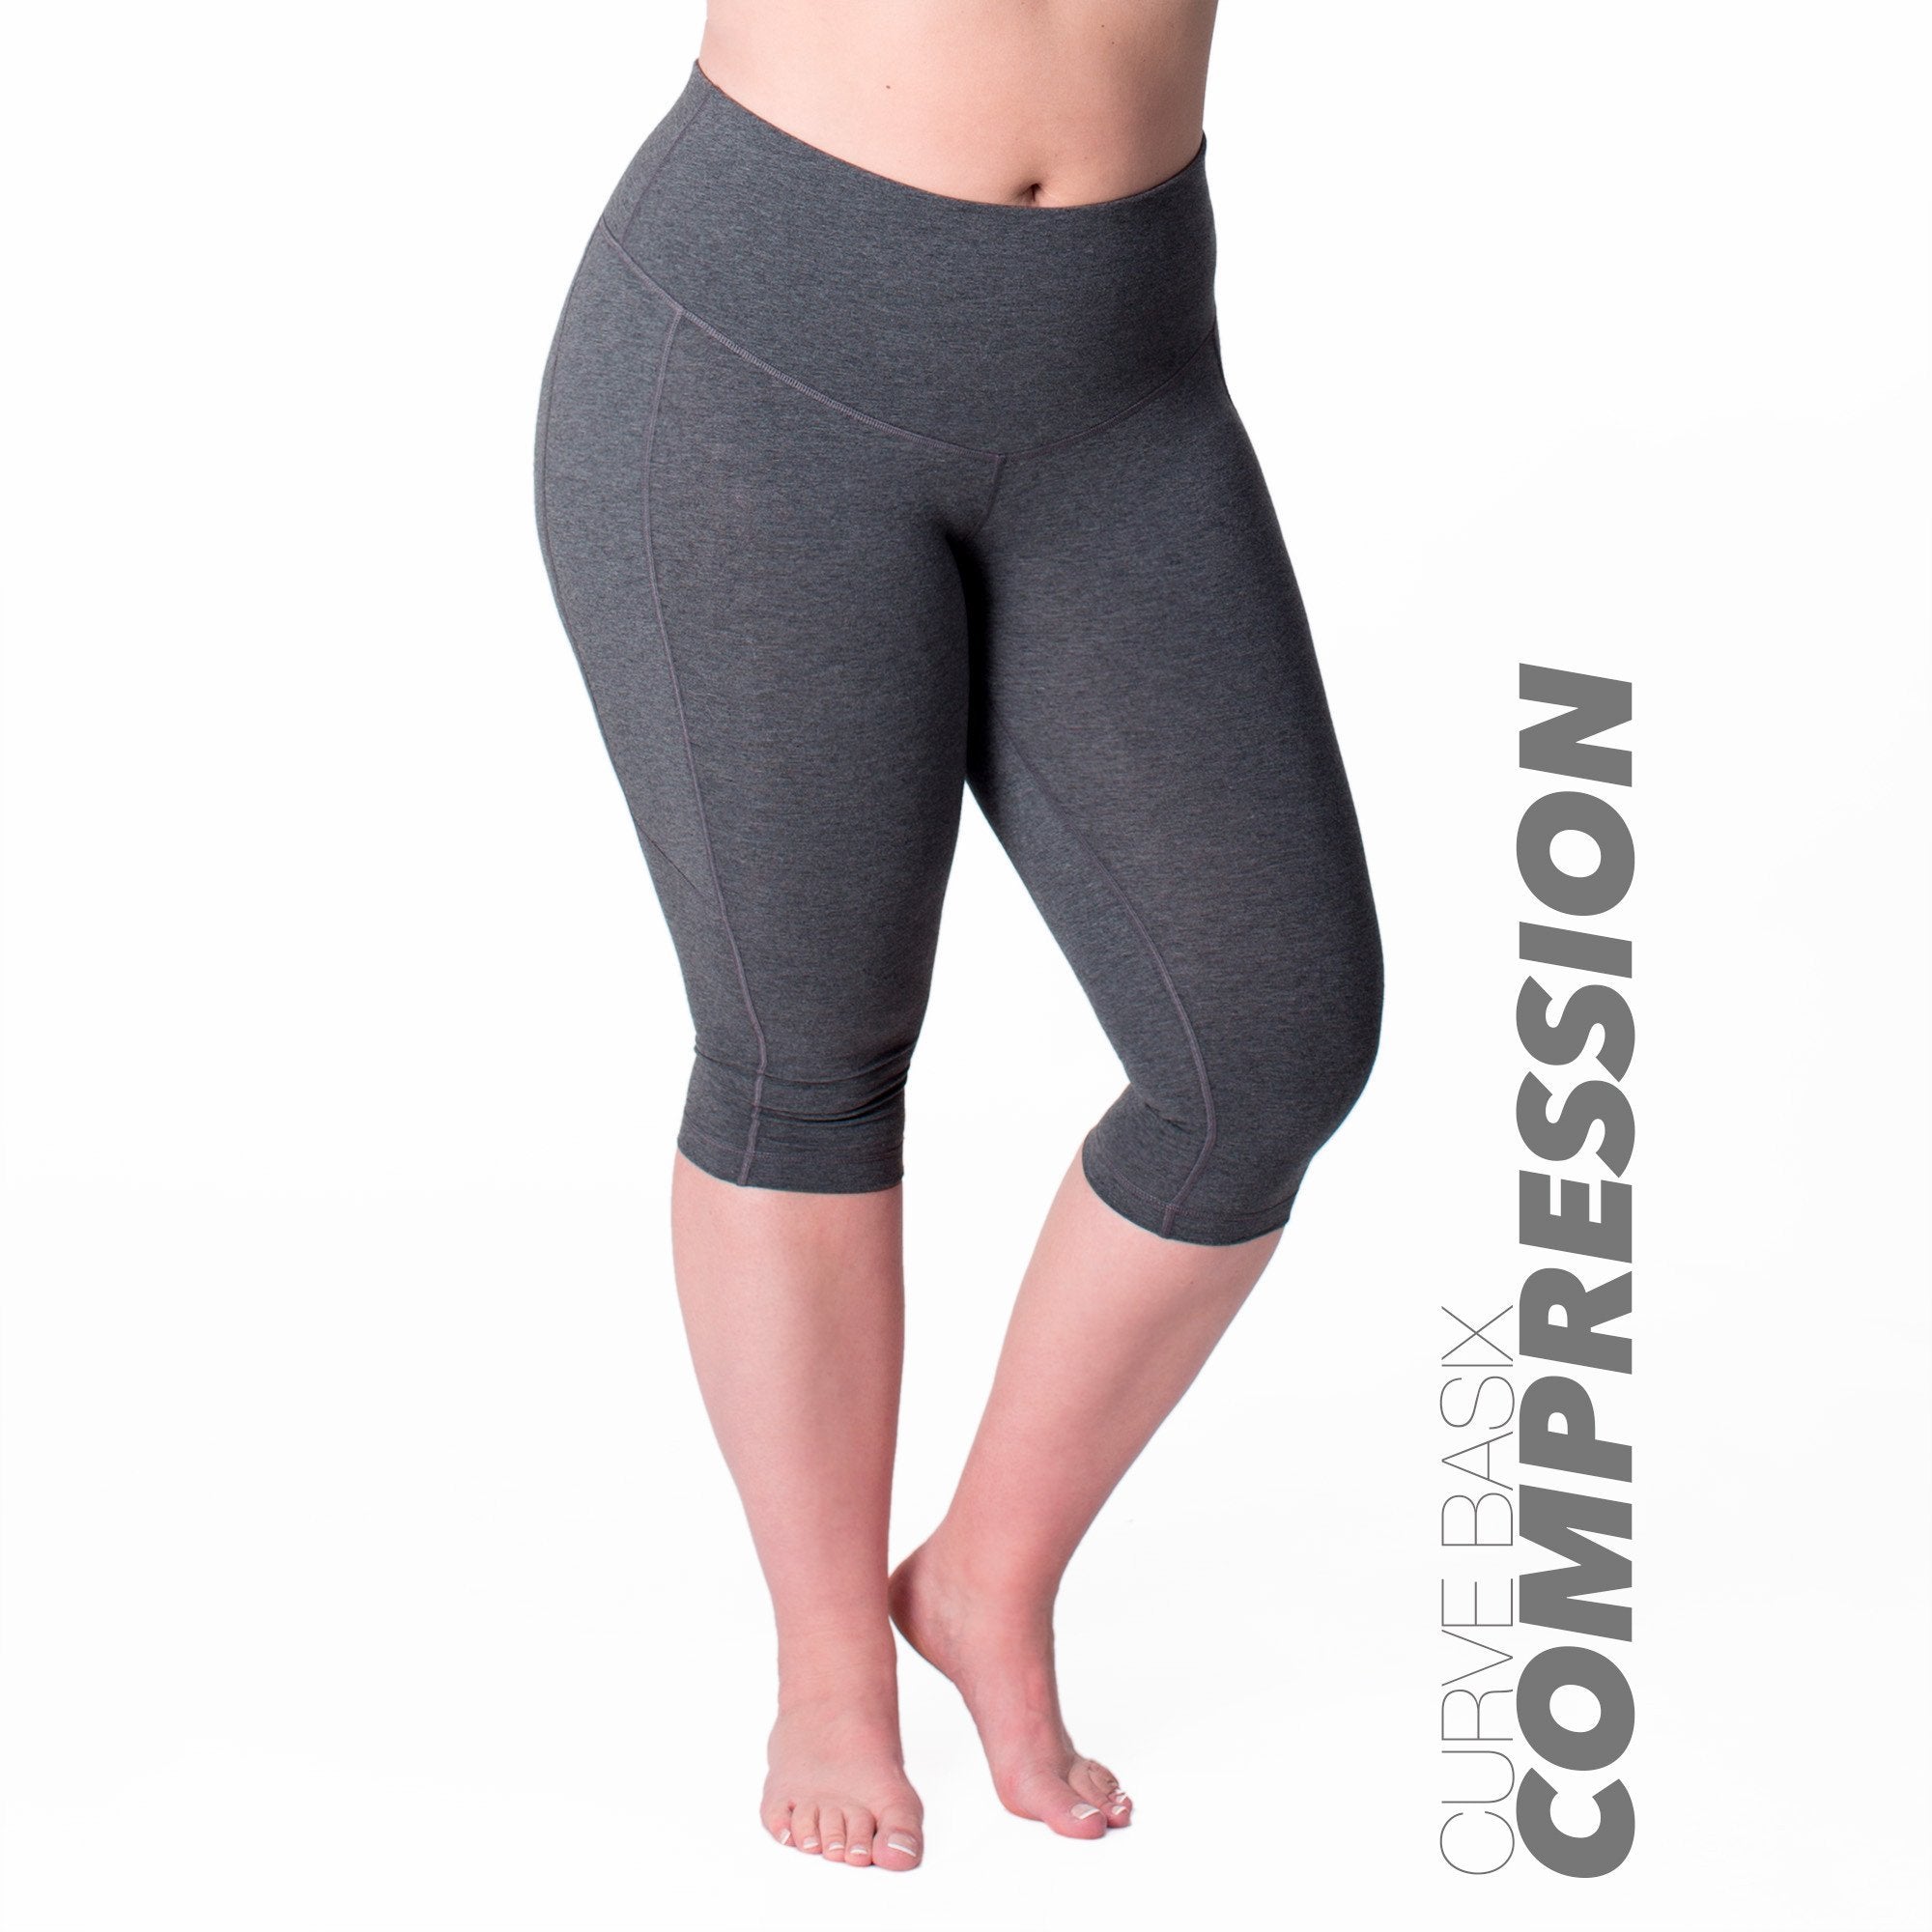 Plus Activewear 'Woman' Compression Gym Leggings